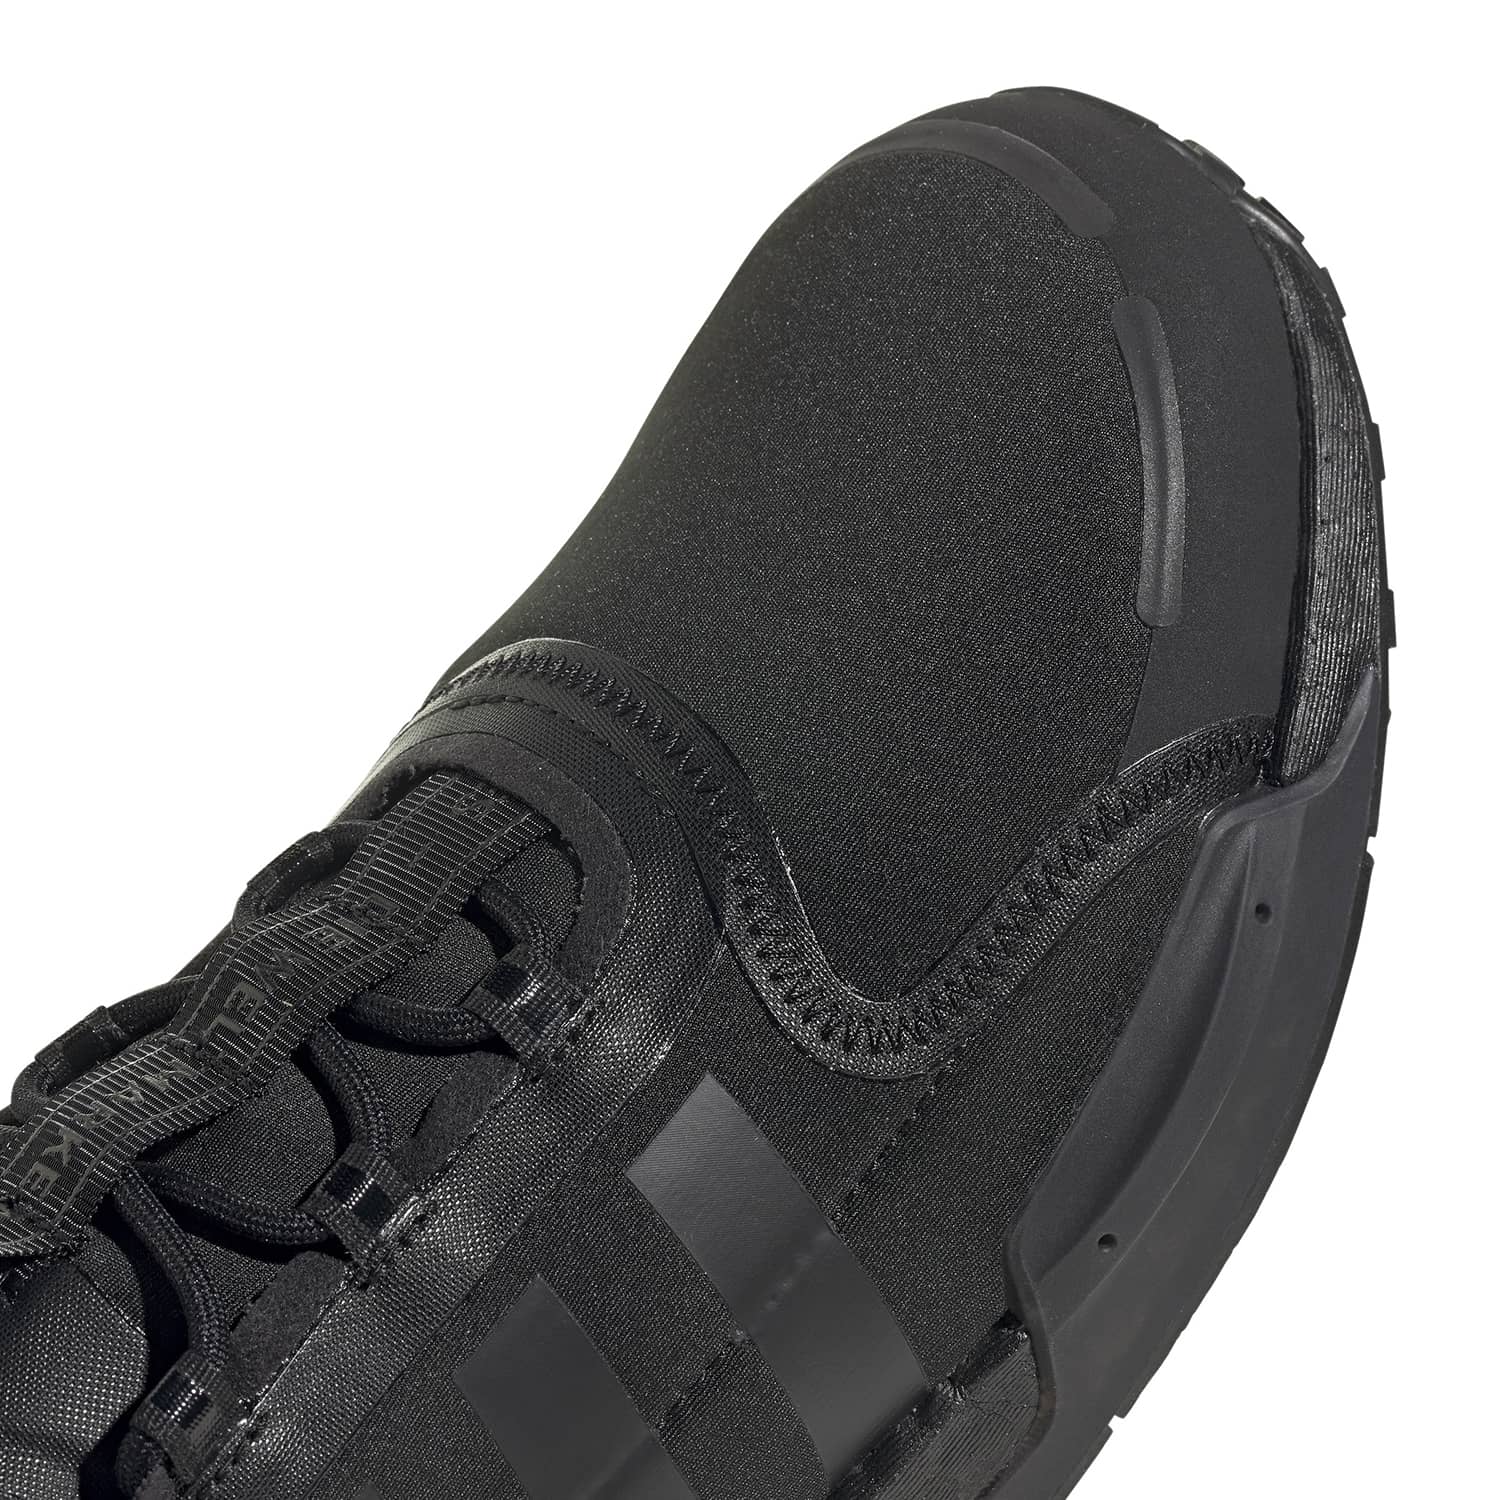 adidas Originals NMD_V3 sneakers in triple black